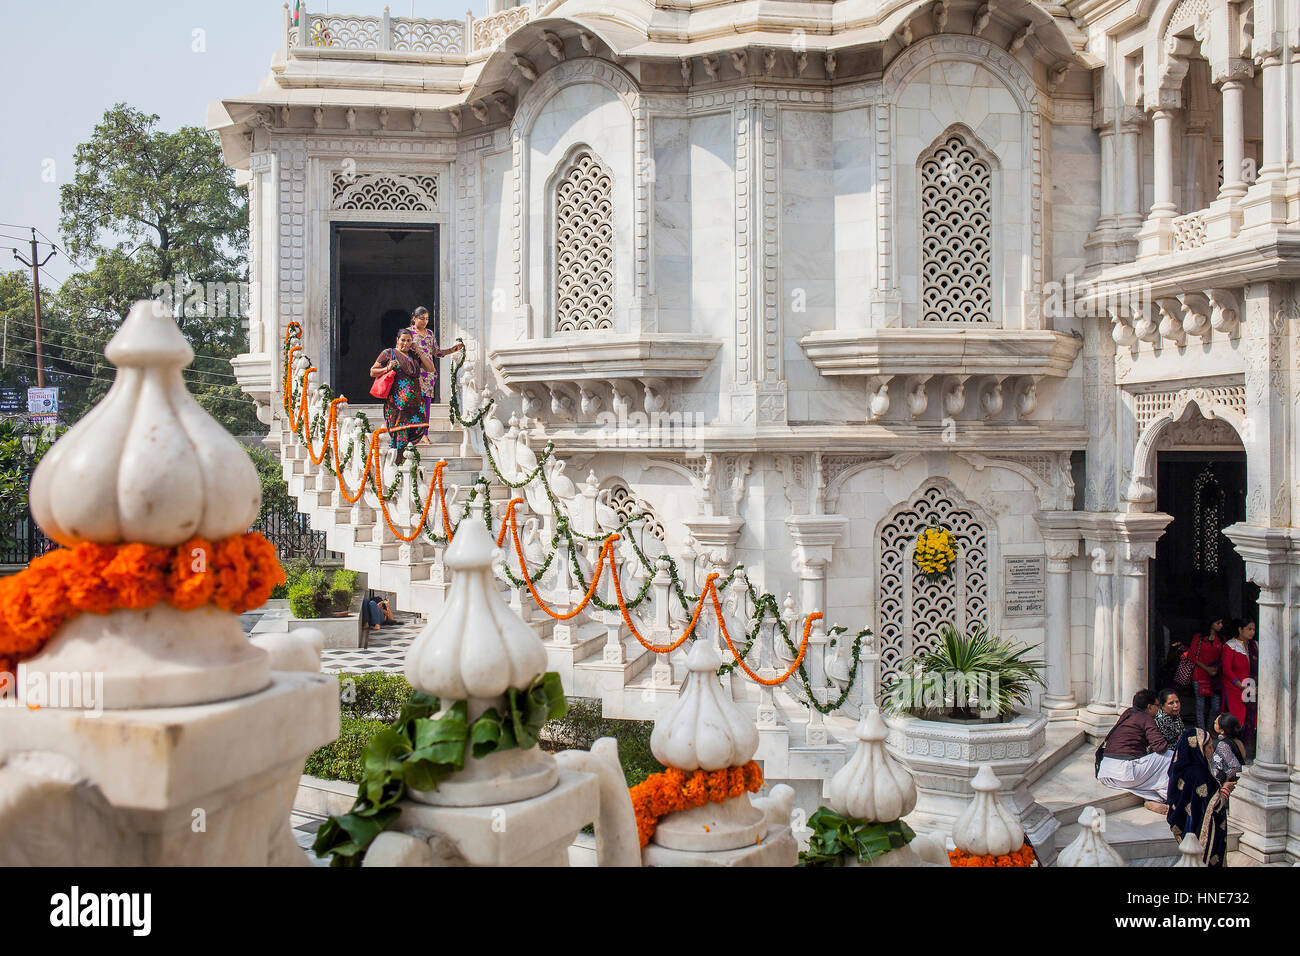 Temple ISKCON, Sri Krishna Balaram Mandir,Vrindavan, Mathura, Uttar Pradesh, Inde Banque D'Images